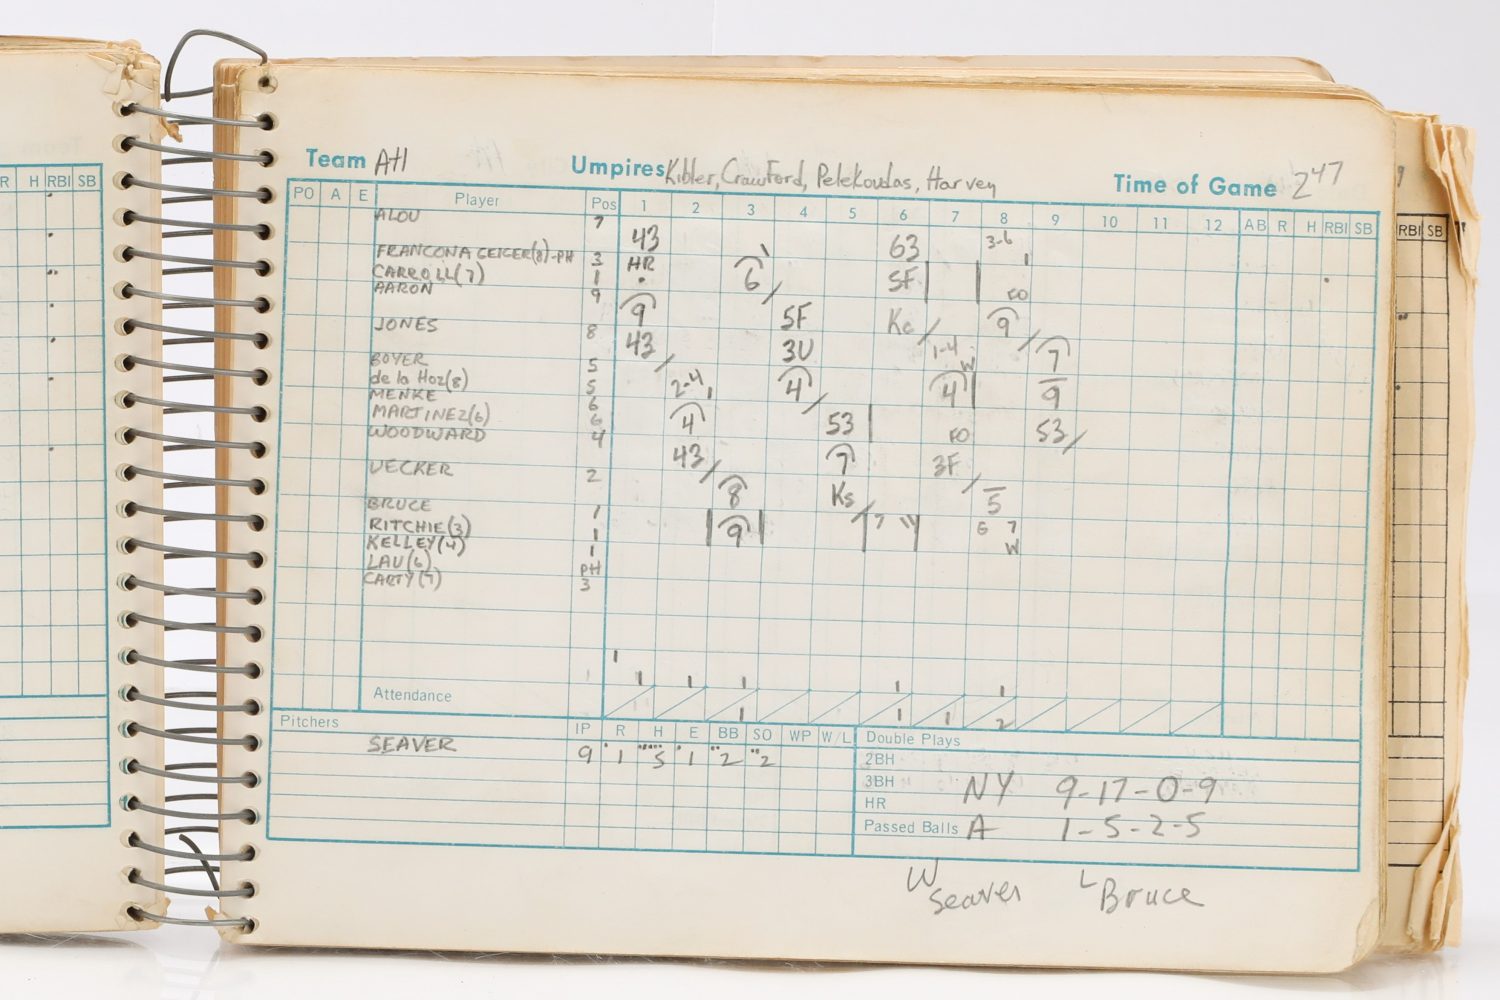 1967 Scorebook Featuring 17 Mets Hits